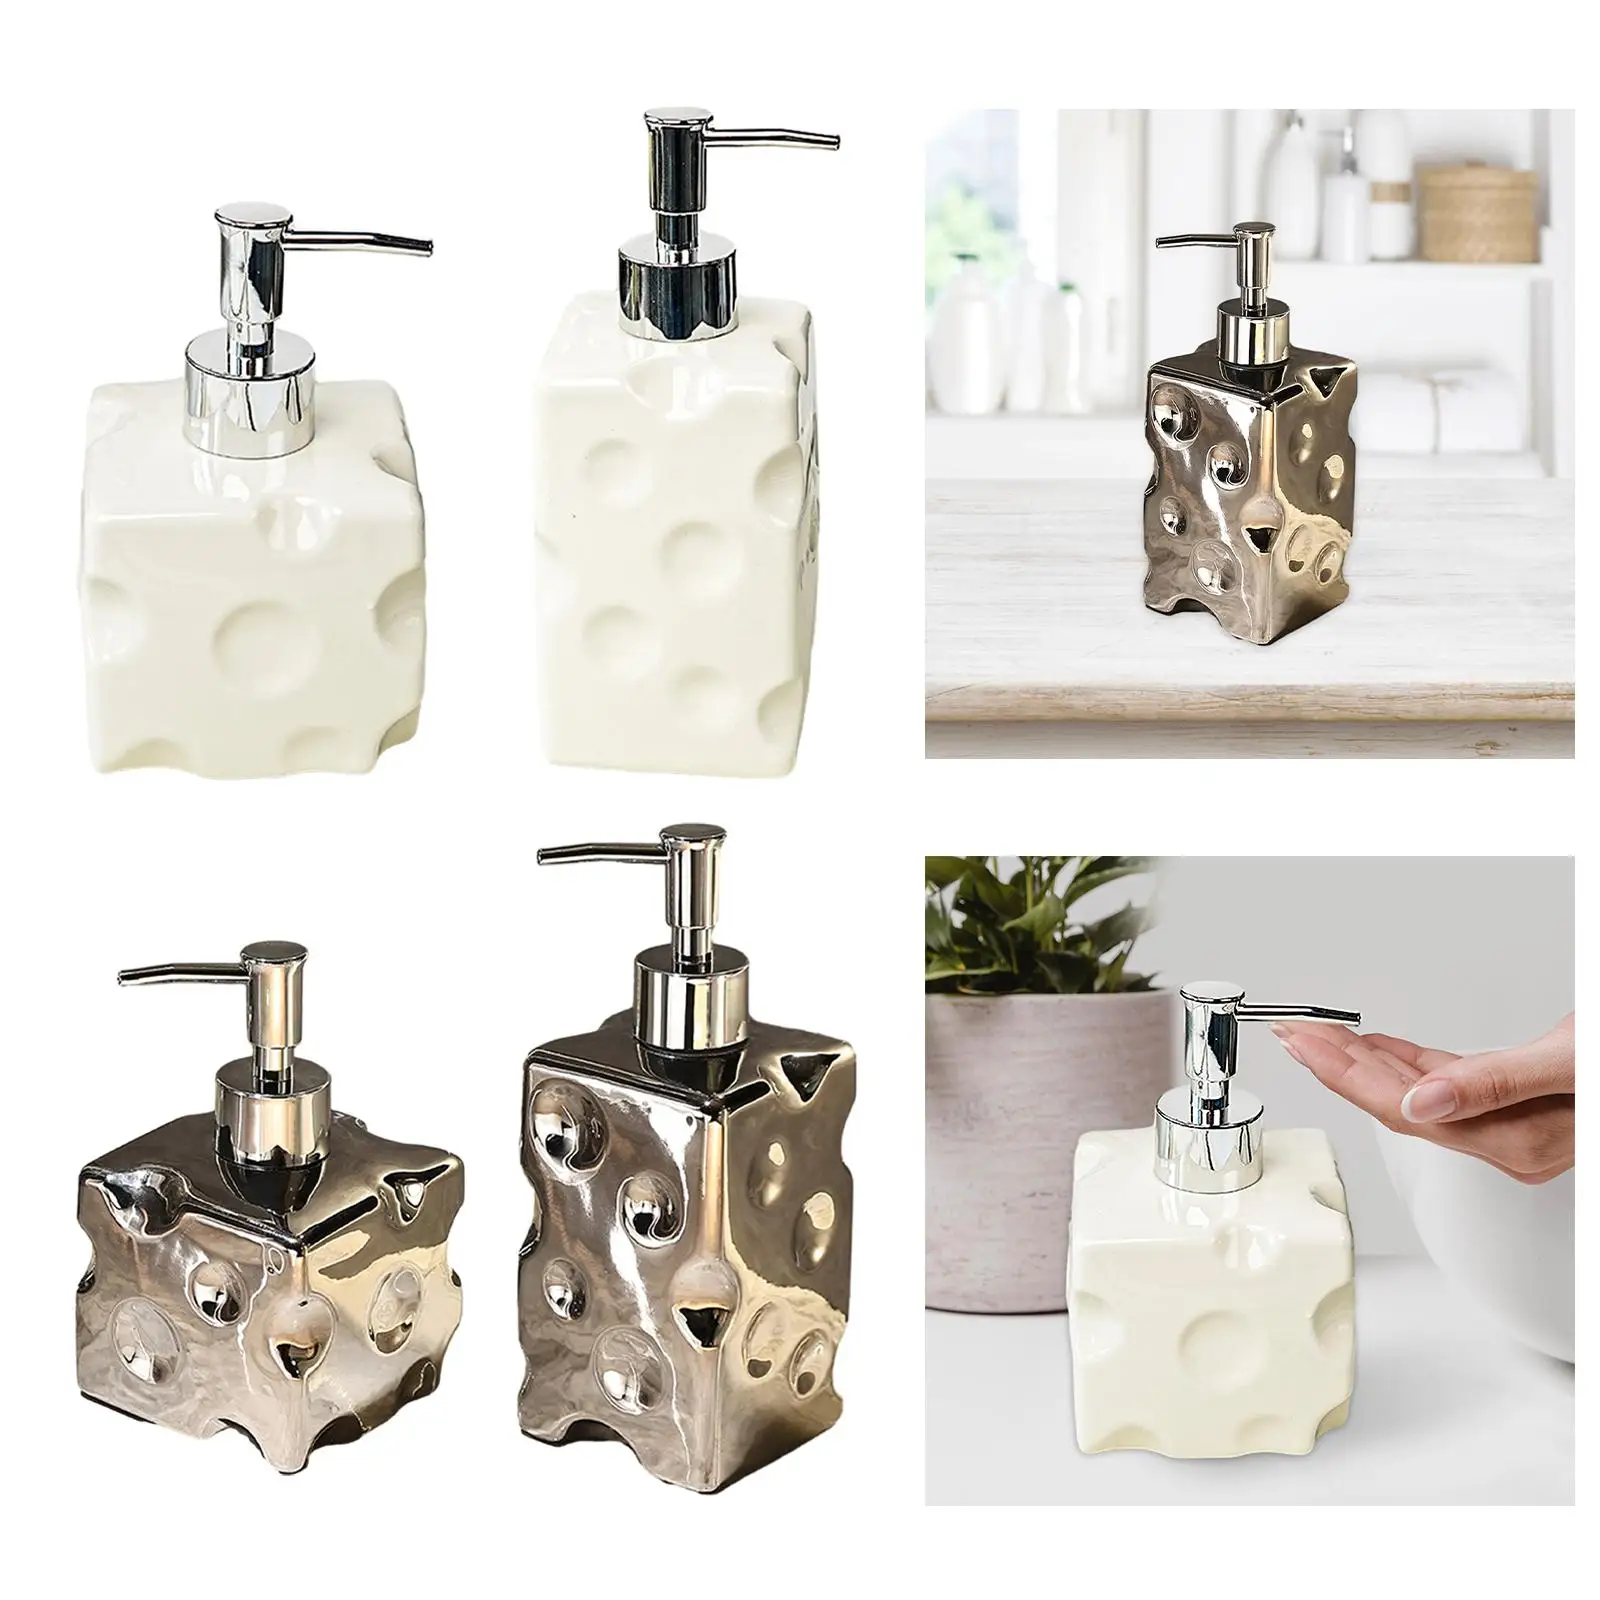 Hand Soap Liquid Dispenser Multipurpose Easy to Fill Leakproof Pump Soap